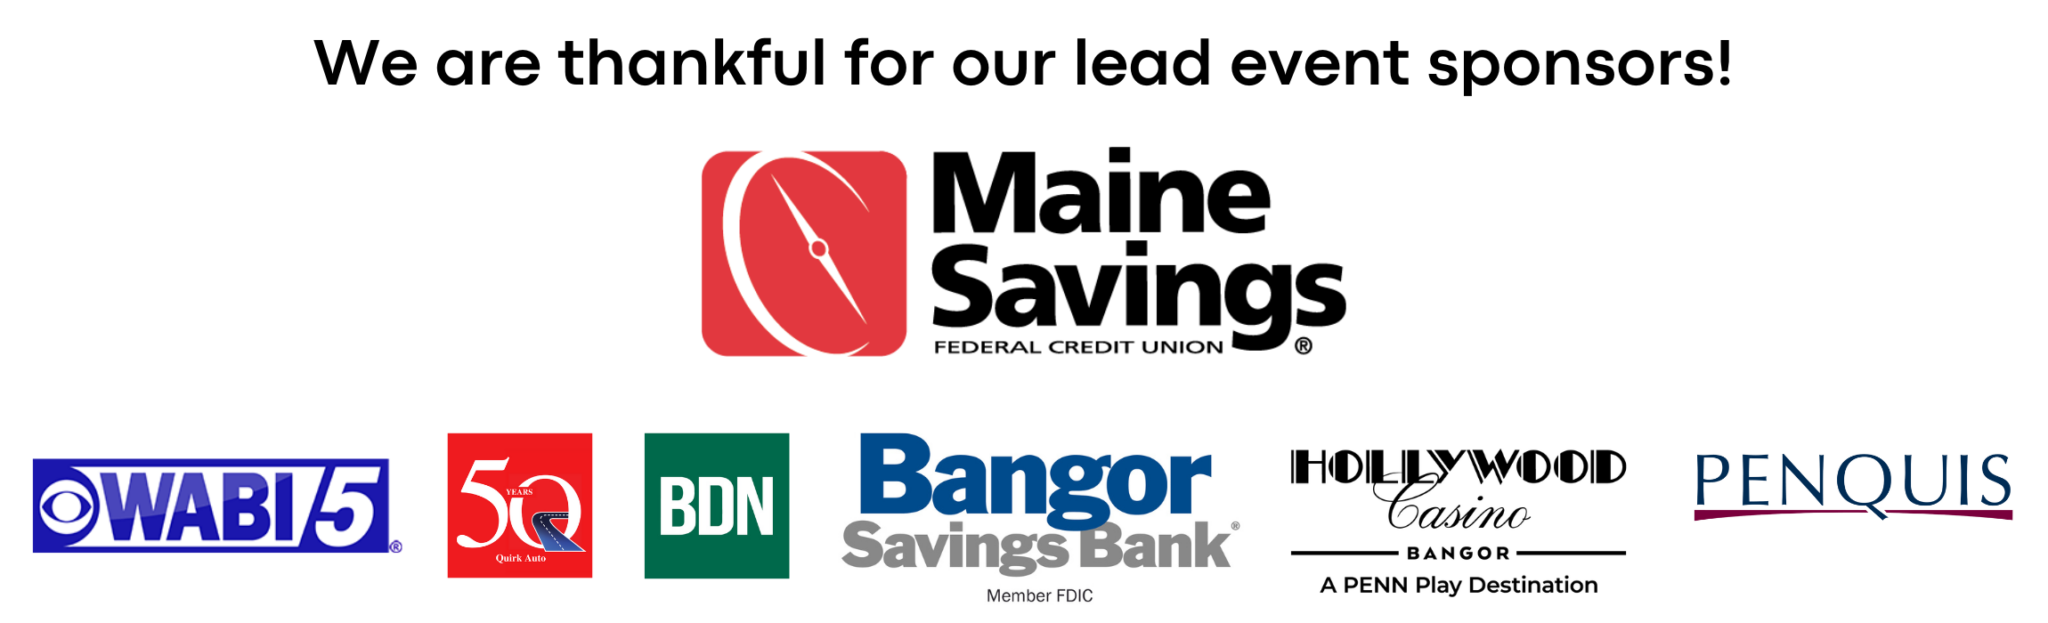 Lead Sponsor Logos - Maine Savings Bank, WABI-TV 5, Quirk Auto, Bangor Daily News, Bangor Savings Bank, Hollywood Casino, Penquis